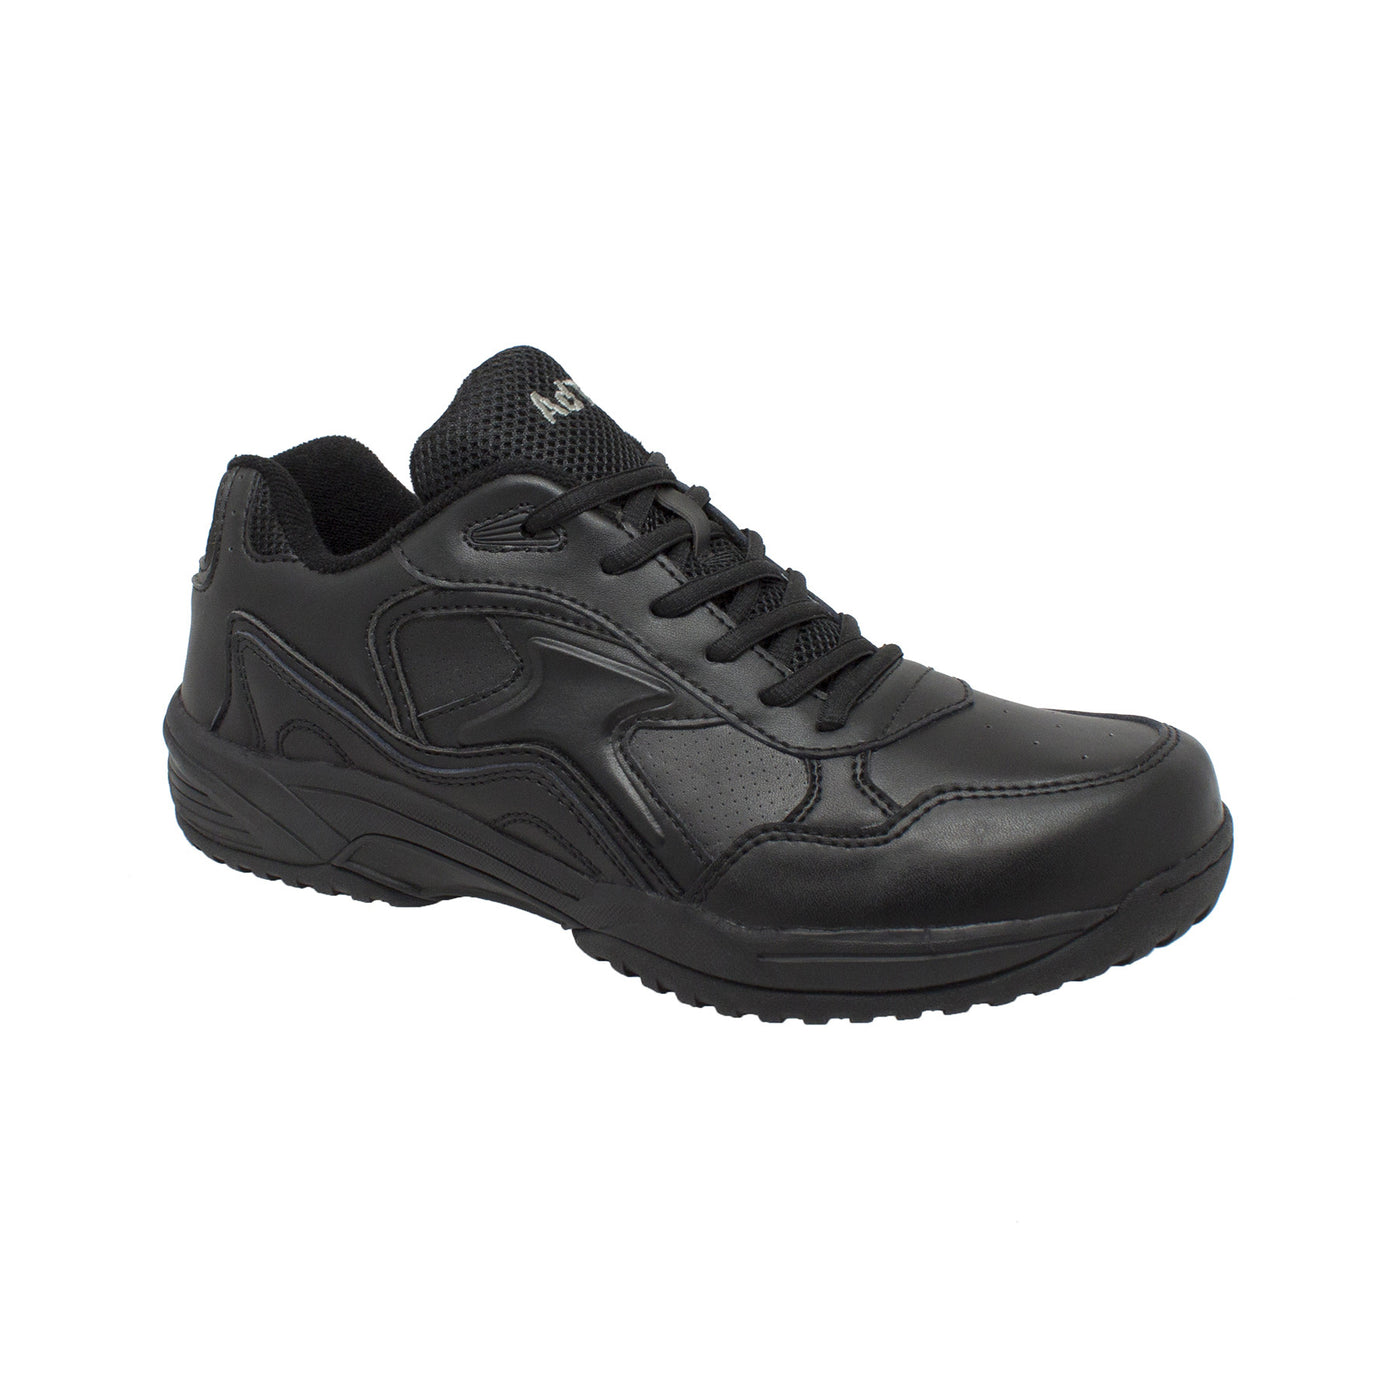 Men's Composite Toe Uniform Athletic Black - 9644 - Shop Genuine Leather men & women's boots online | AdTecFootWear